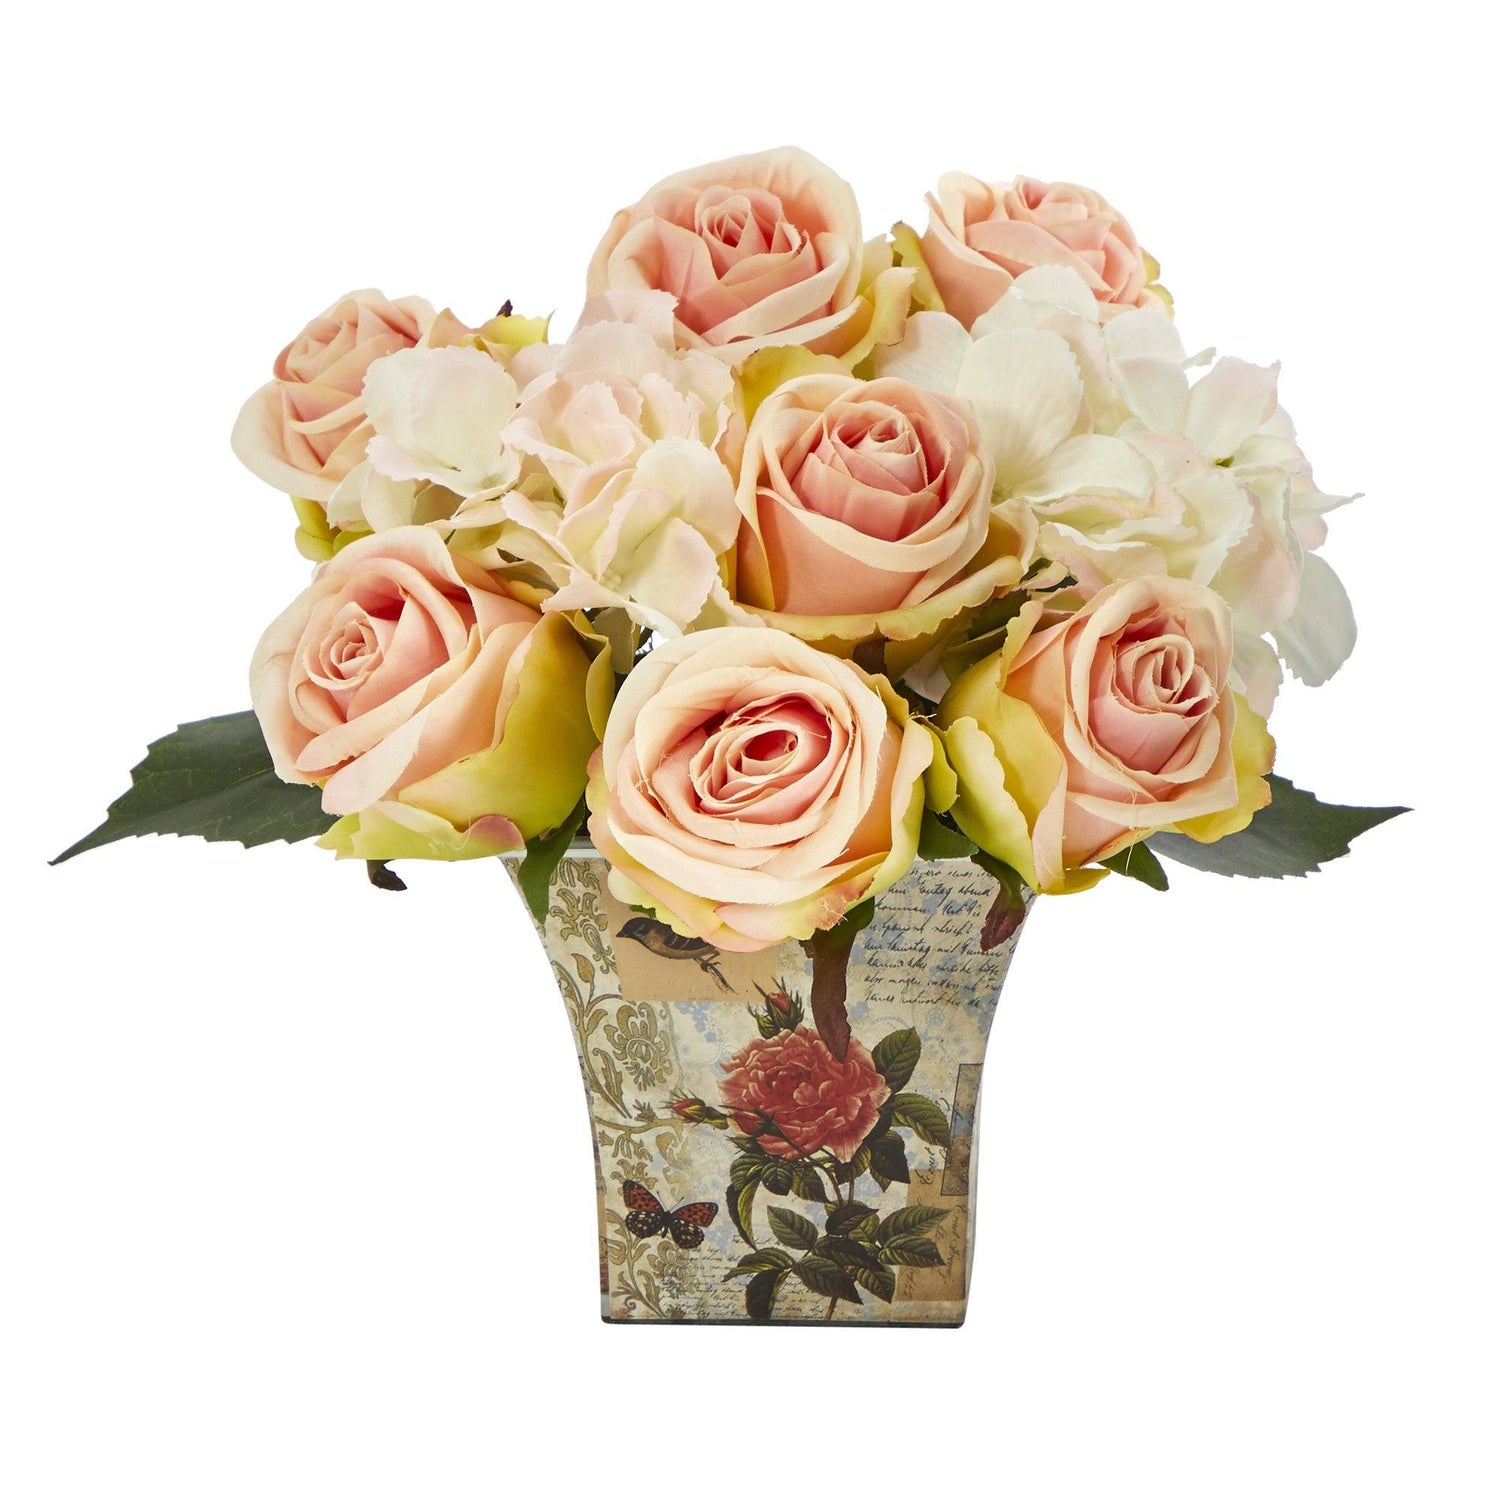 8” Rose and Hydrangea Bouquet Artificial Arrangement in Floral Vase